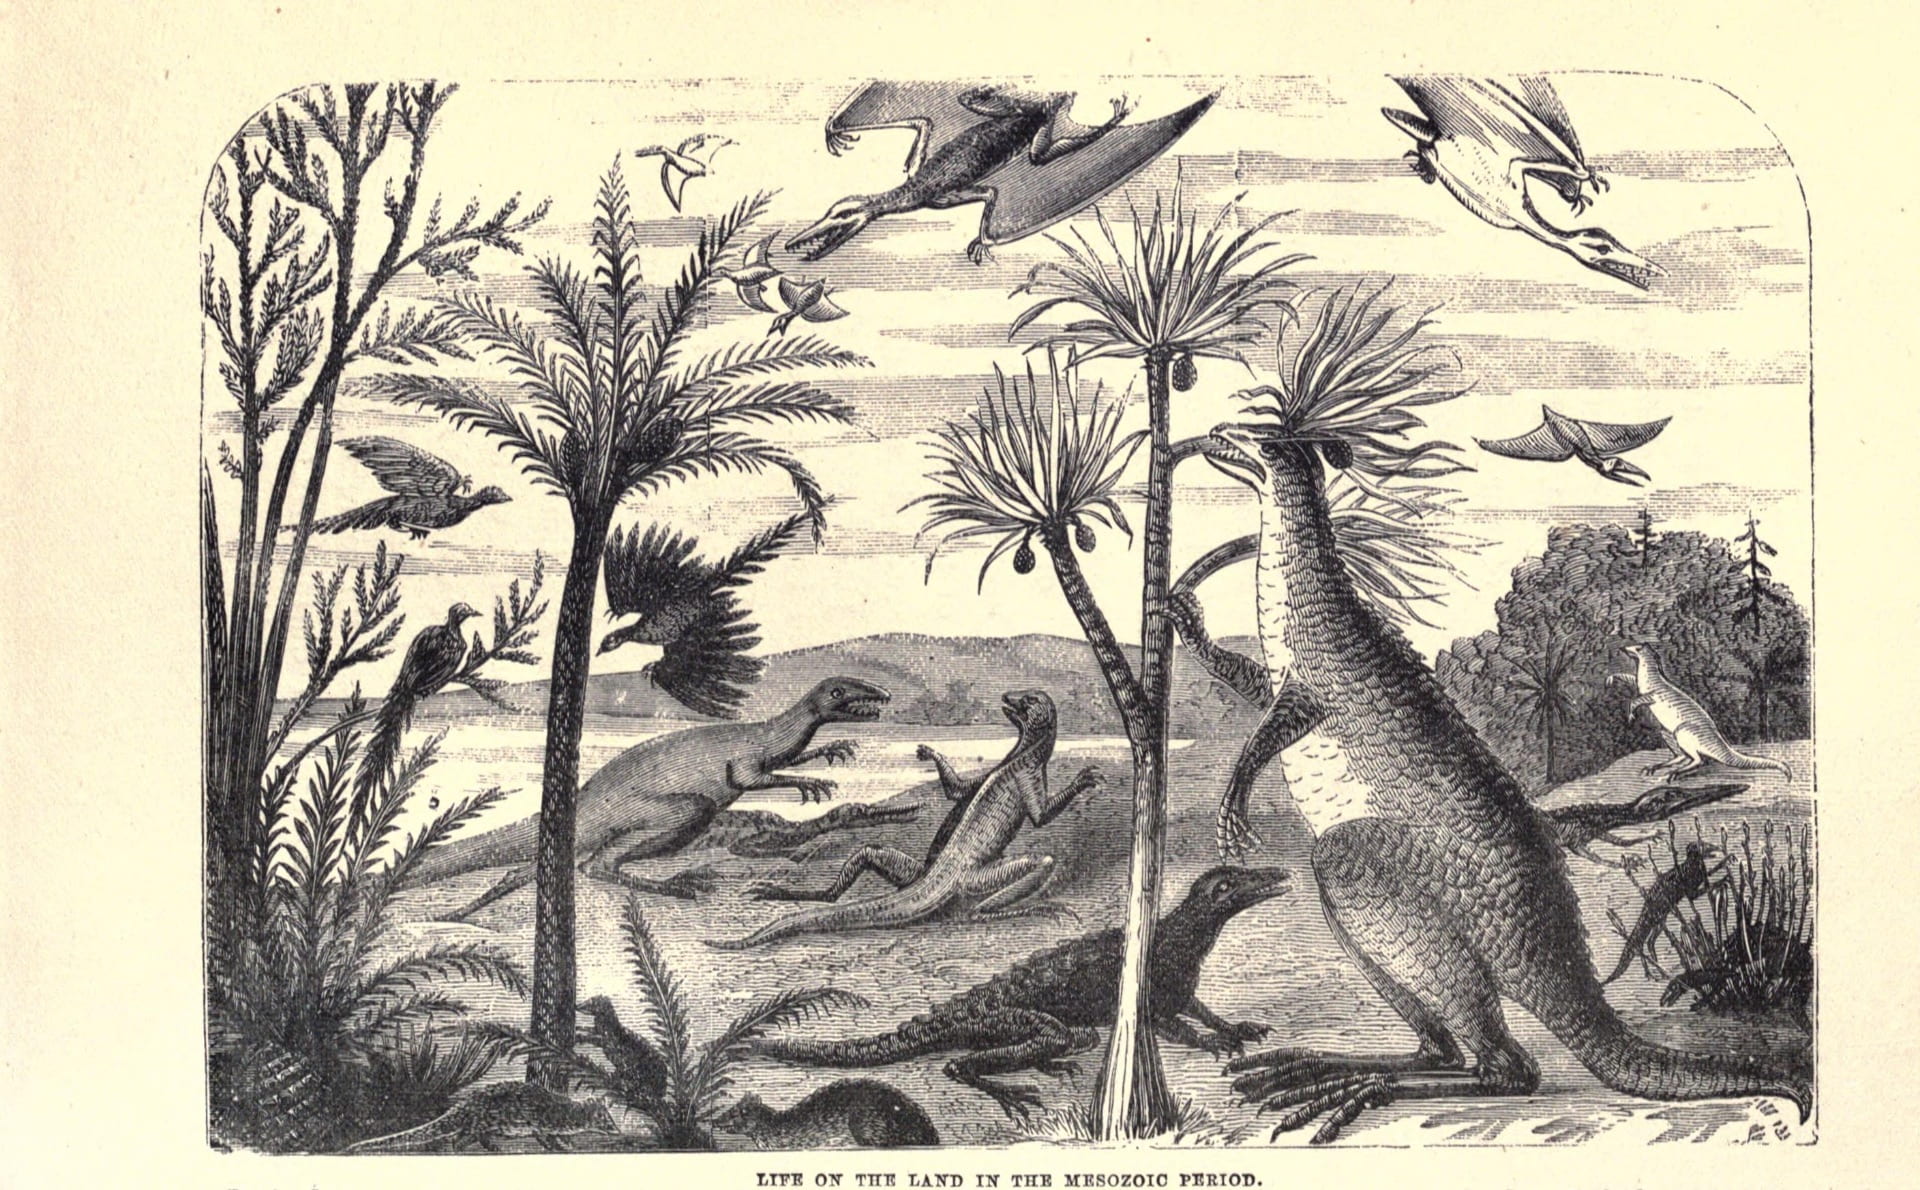 nineteenth century rendering of dinosaurs roaming the landscape